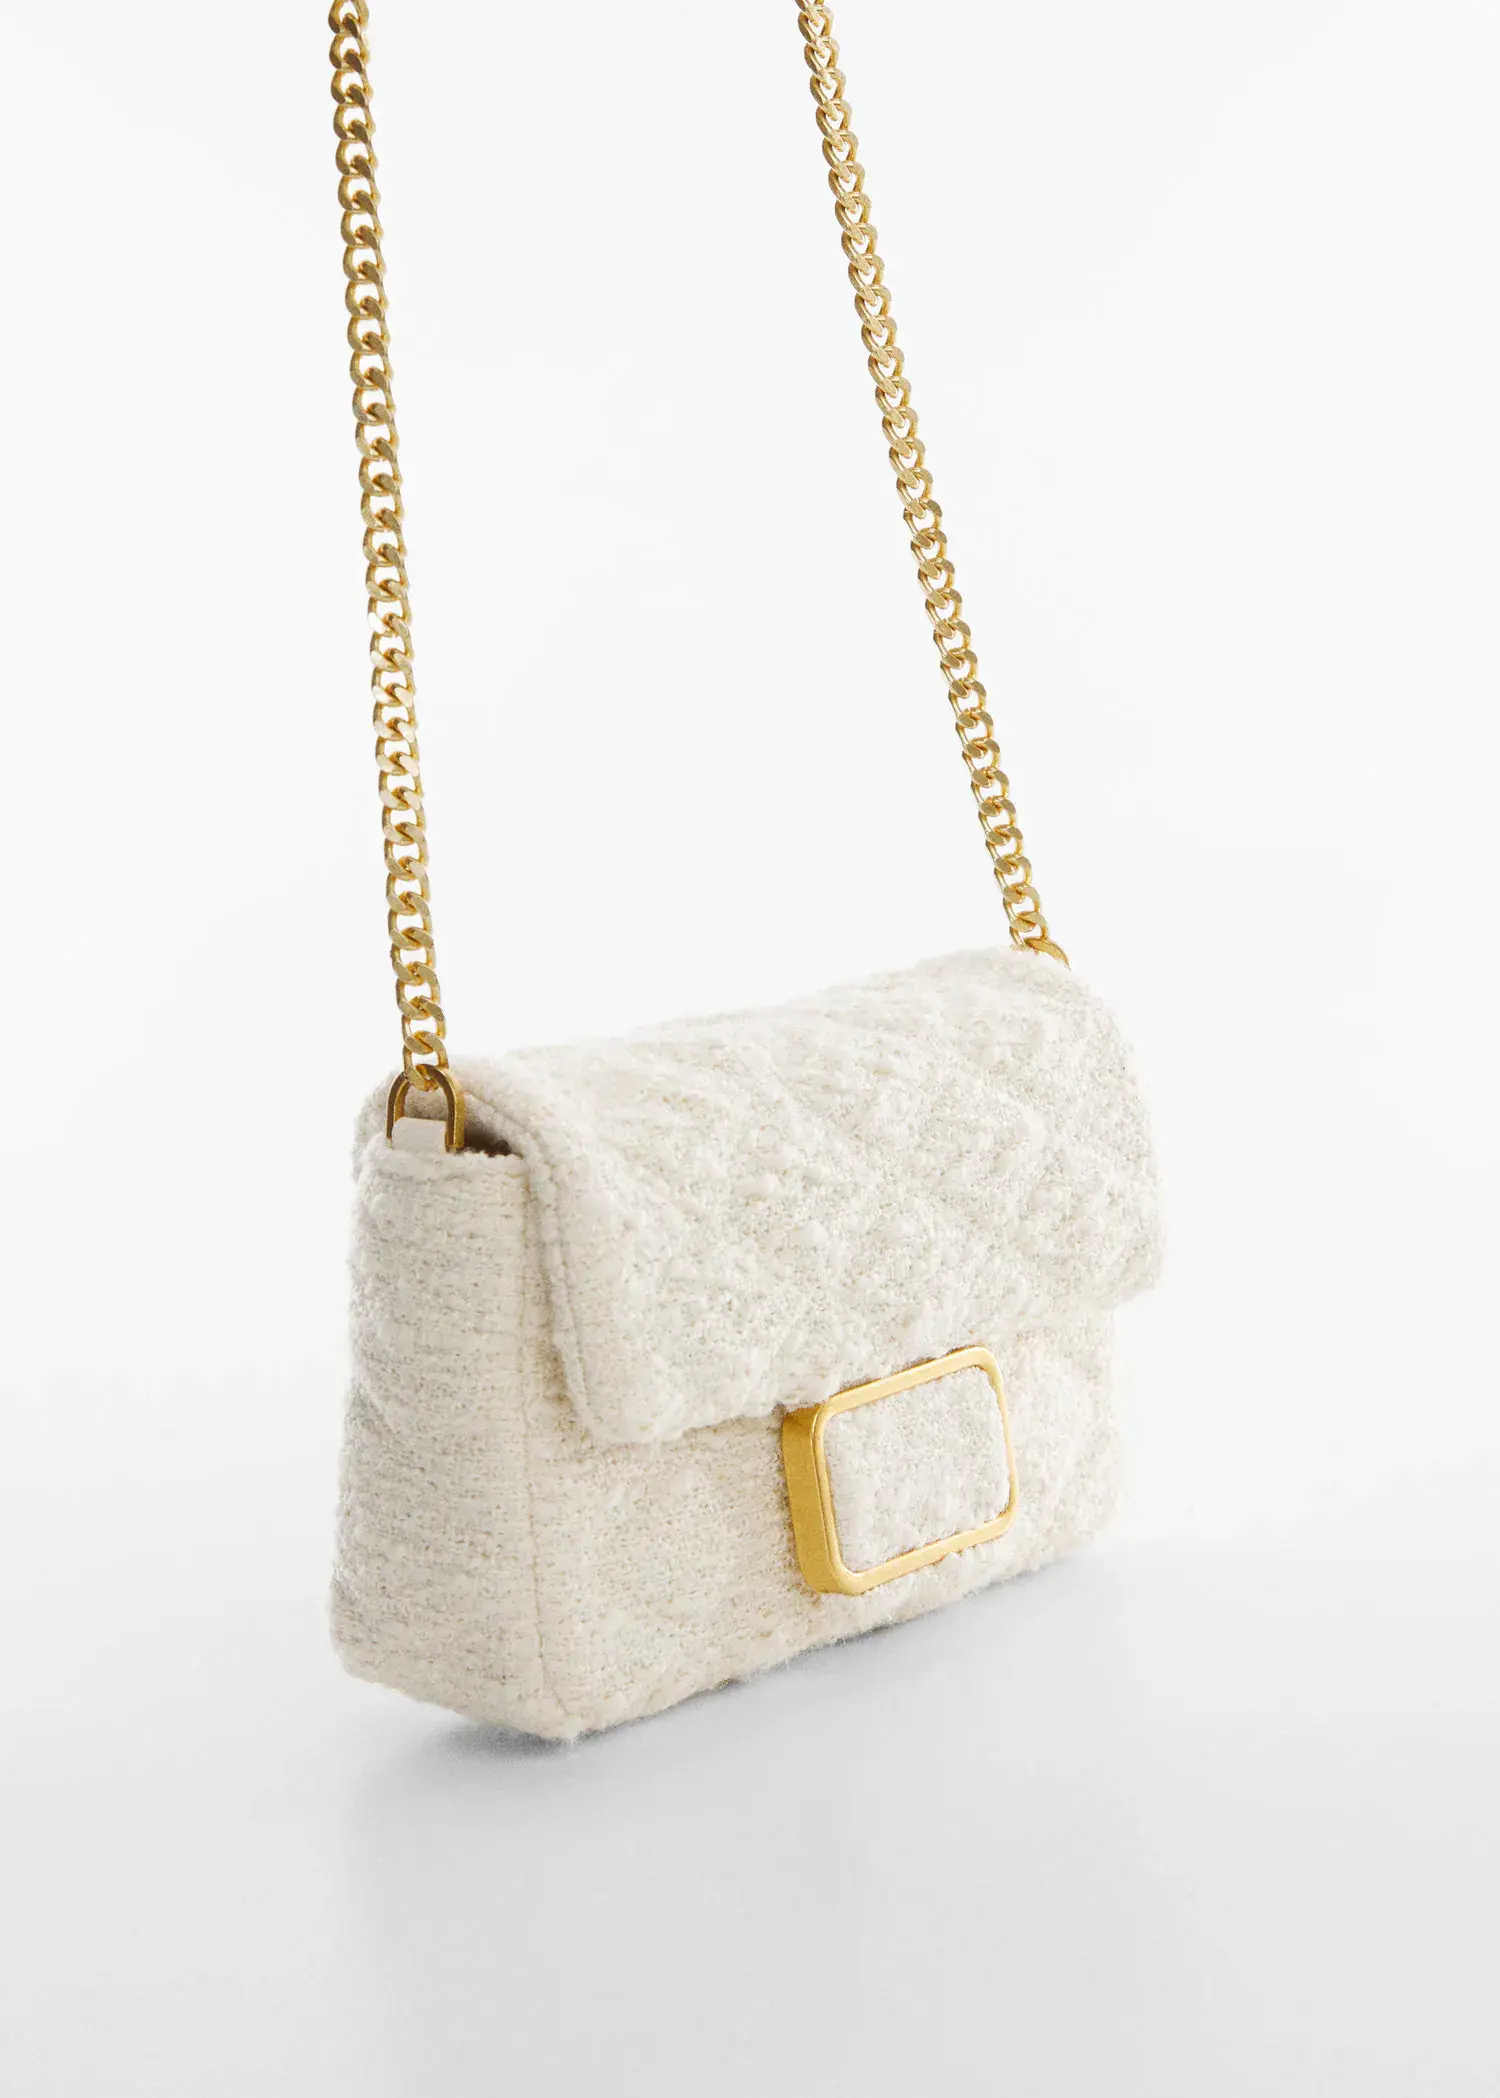 Mango Small textured chain bag. a white purse with a gold chain strap. 